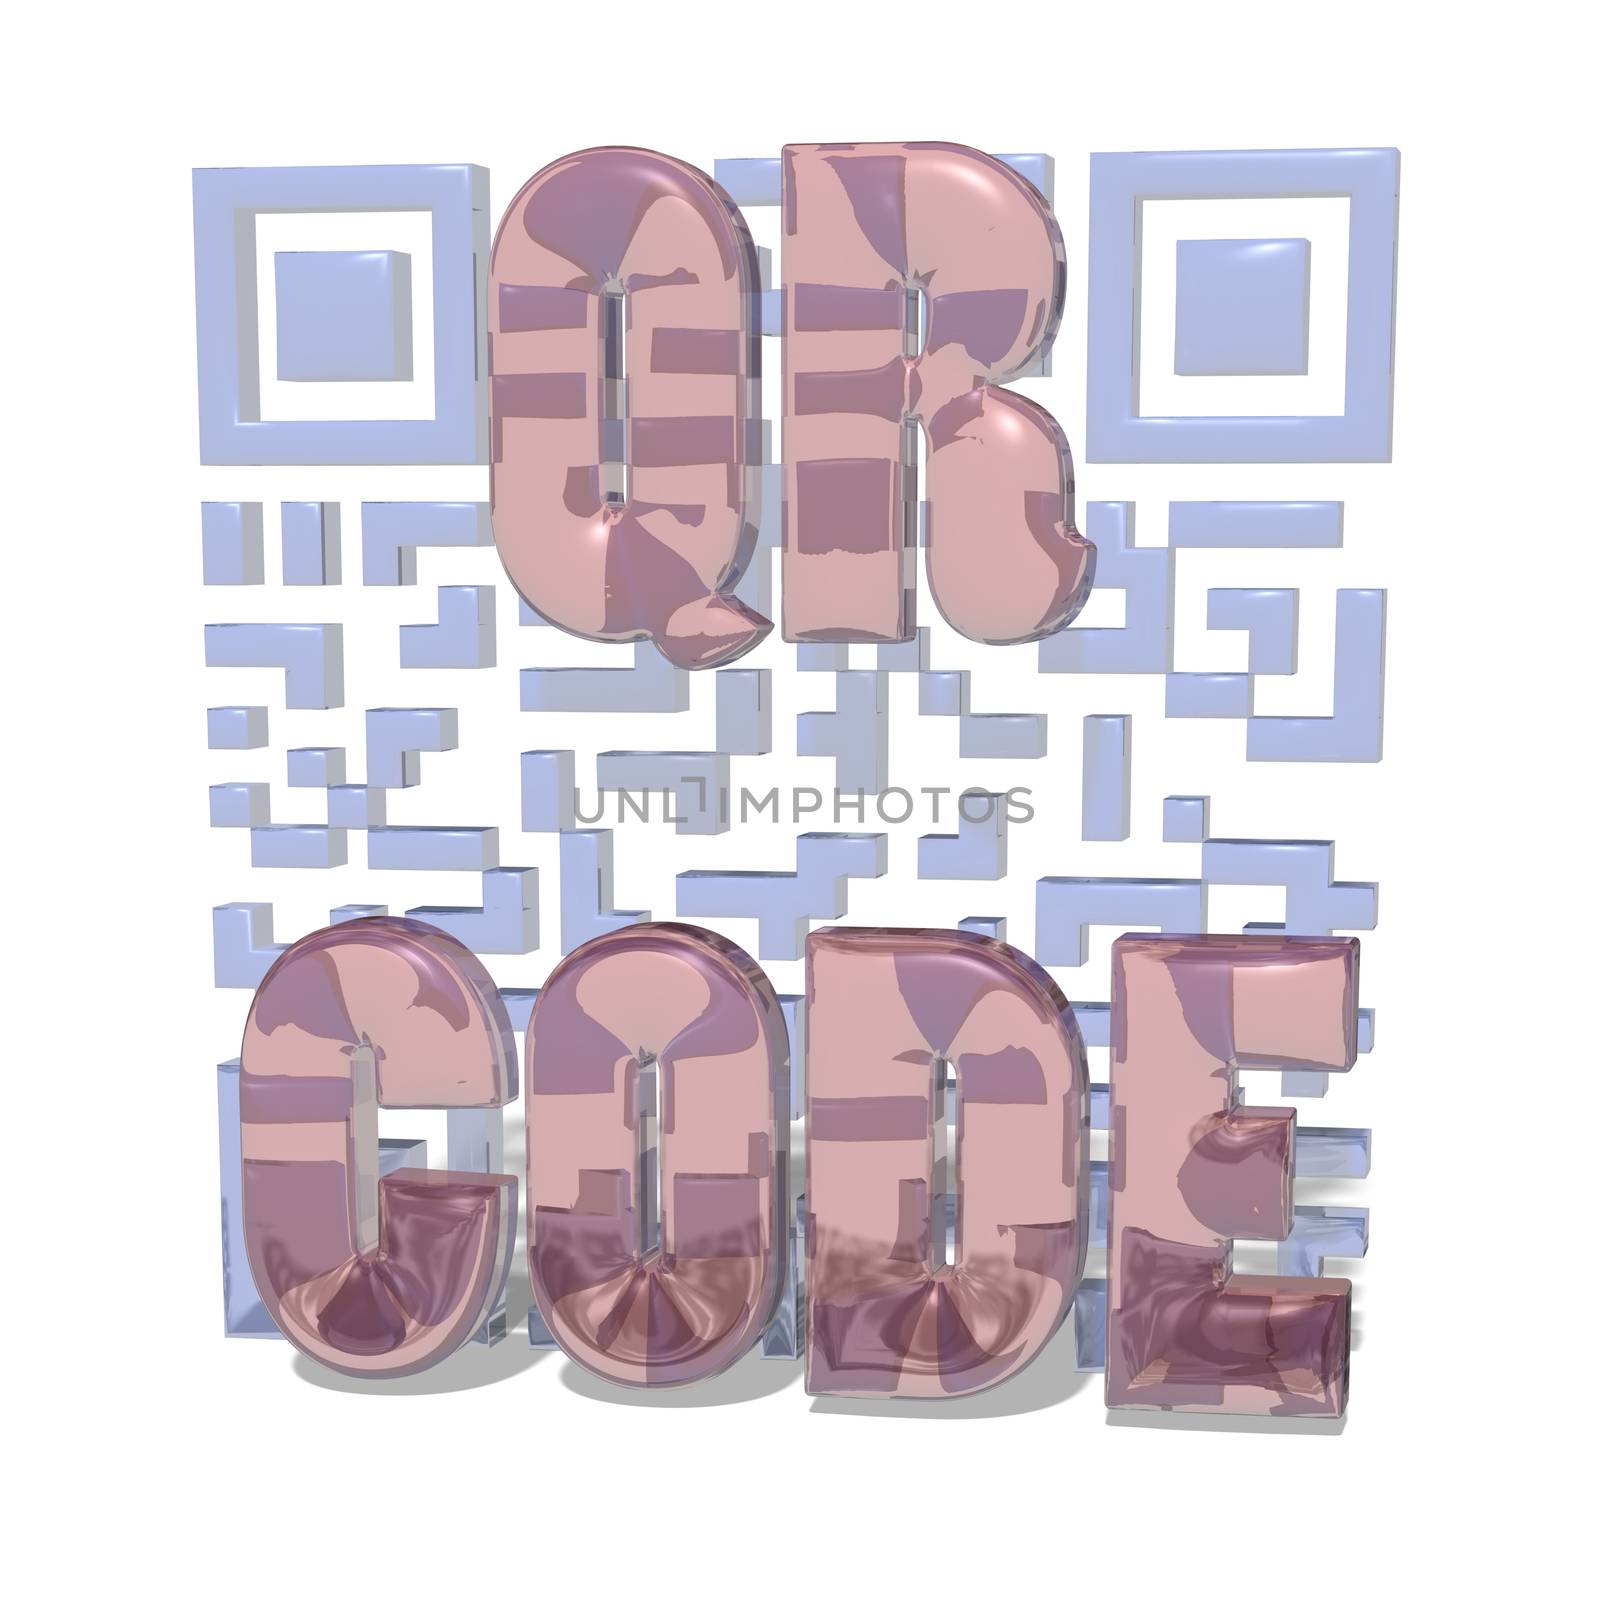 QR code concept by richter1910